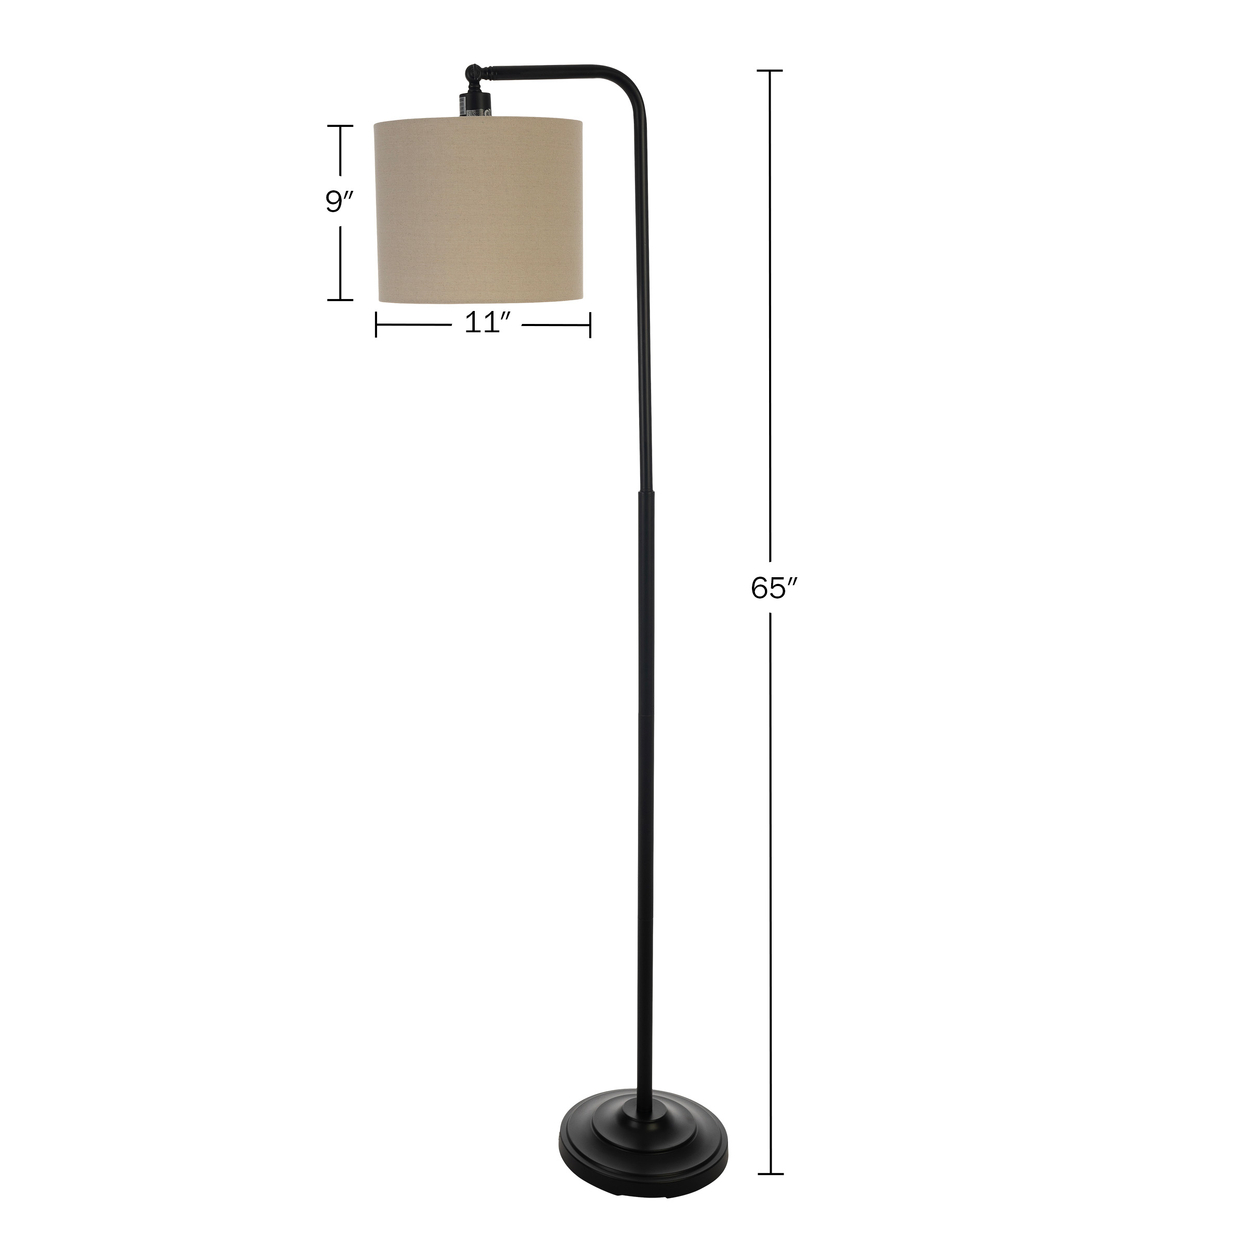 Lavish Home Black Floor Lamp 65in Tall Modern Linen Shade LED Bulb Shade 11L x 11W x 9H in